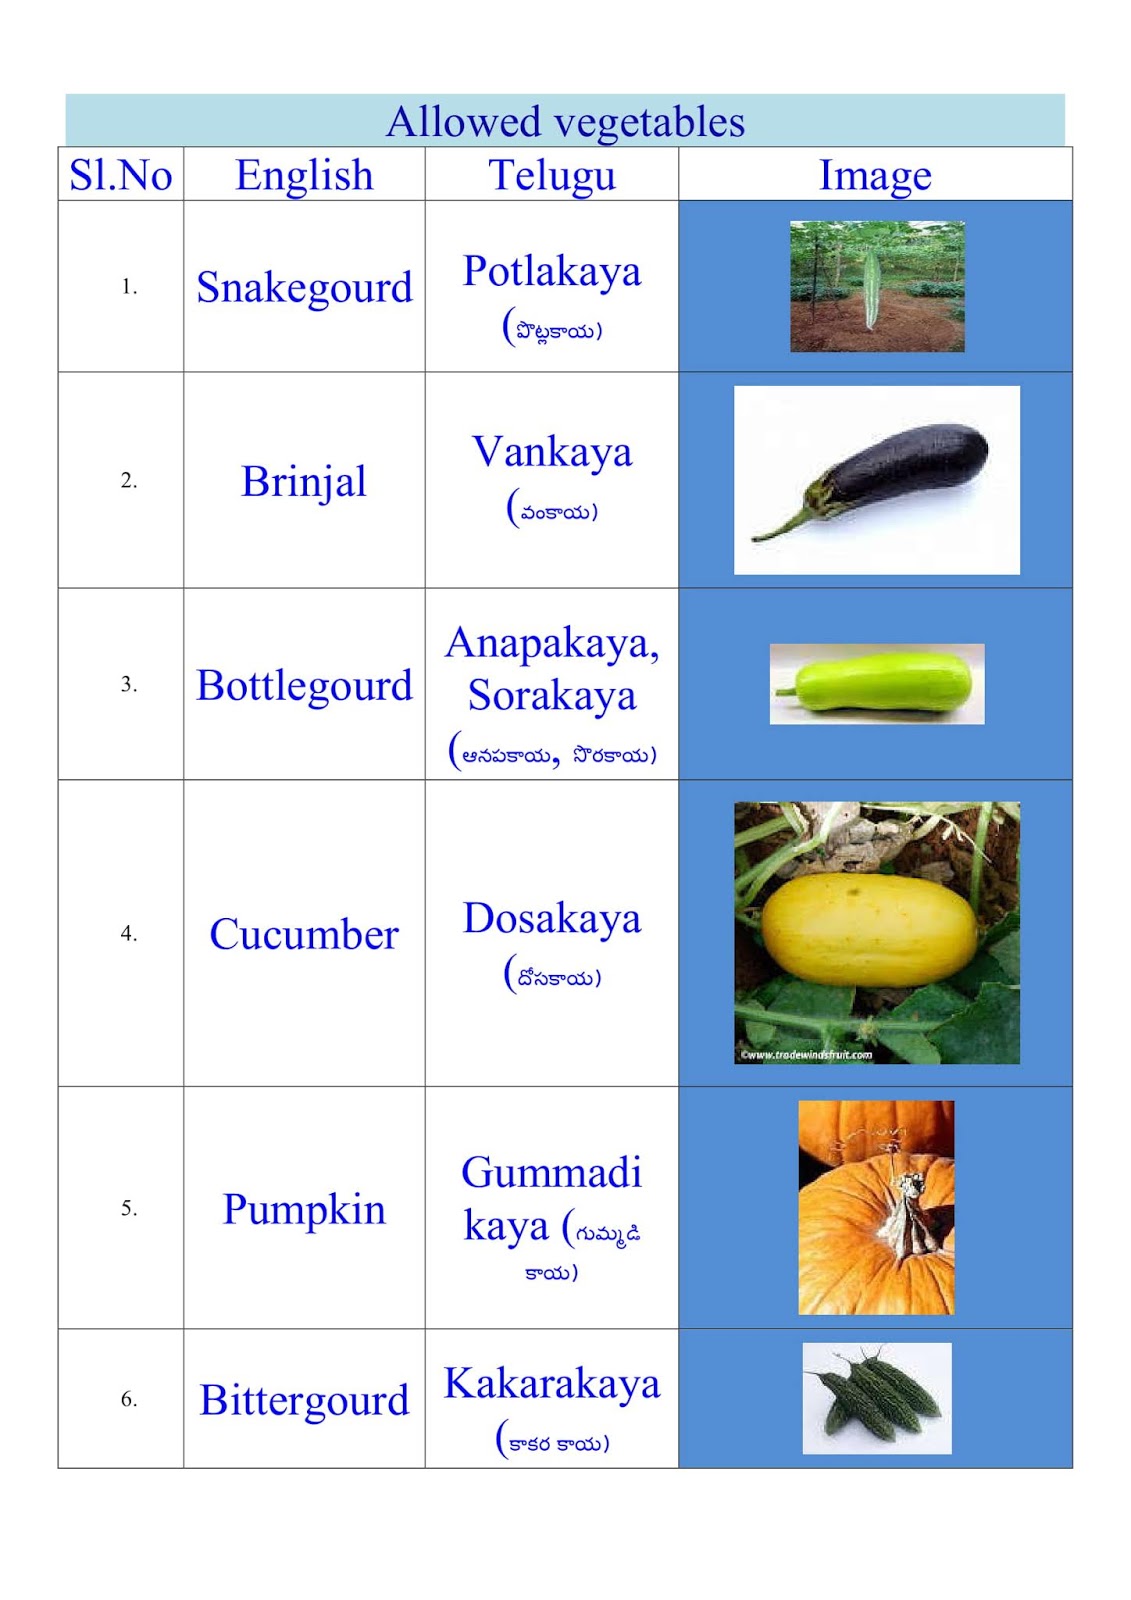 Veeramachaneni Ramakrishna Diet Chart